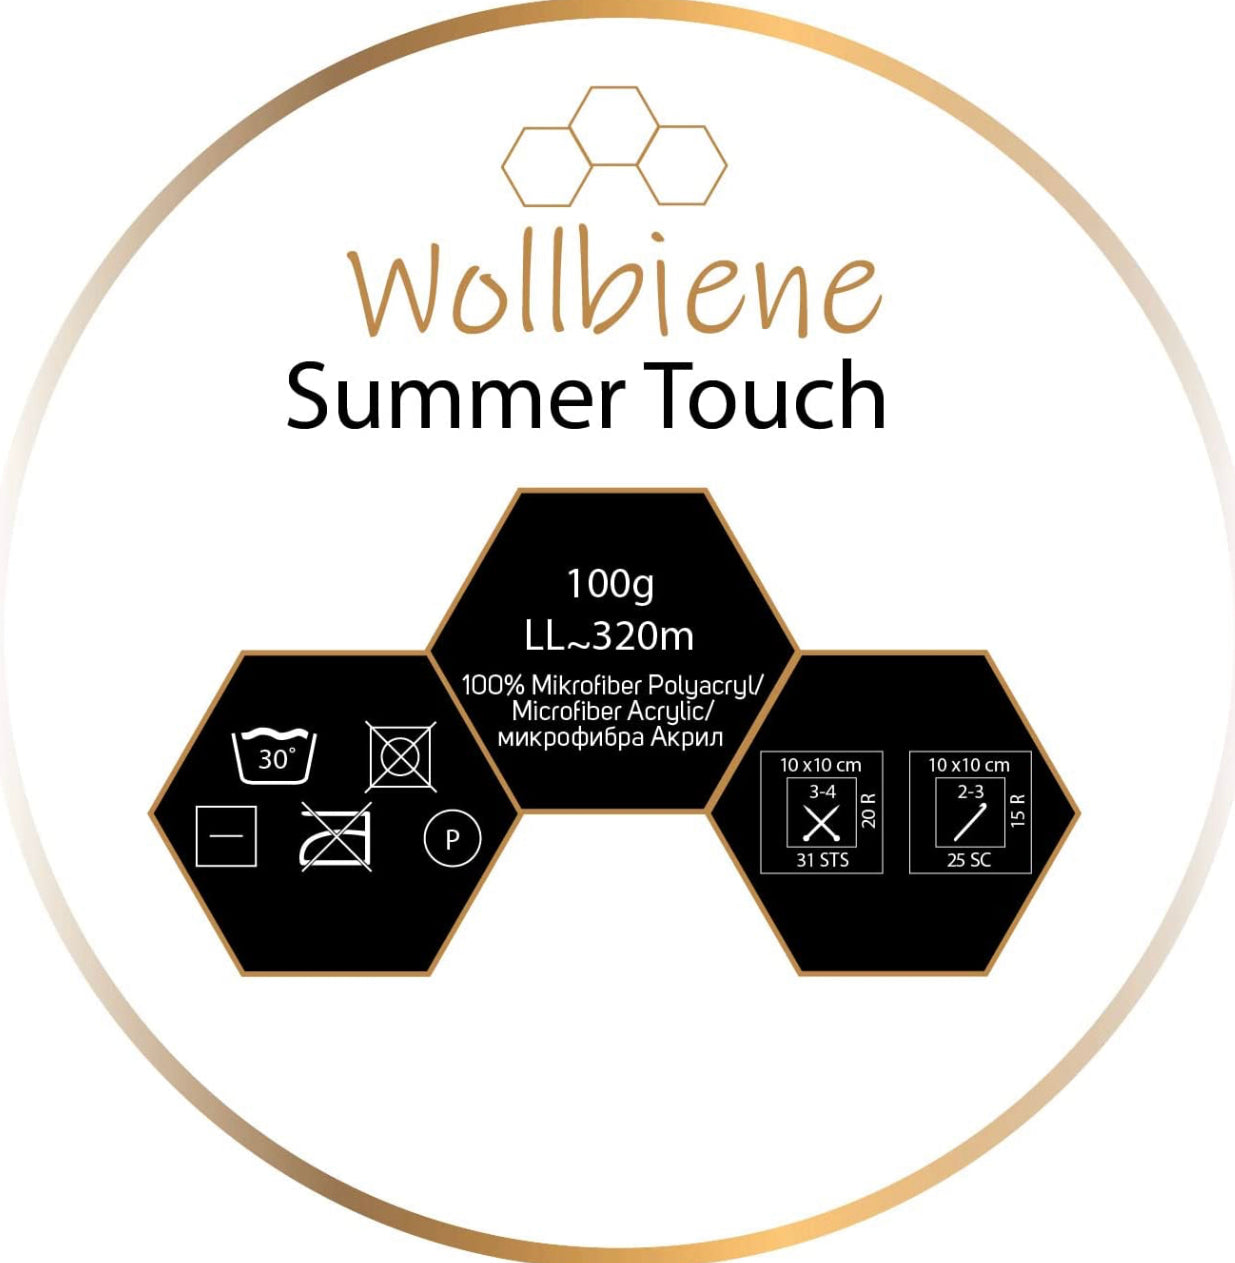 Wollbiene Summer Touch - 503